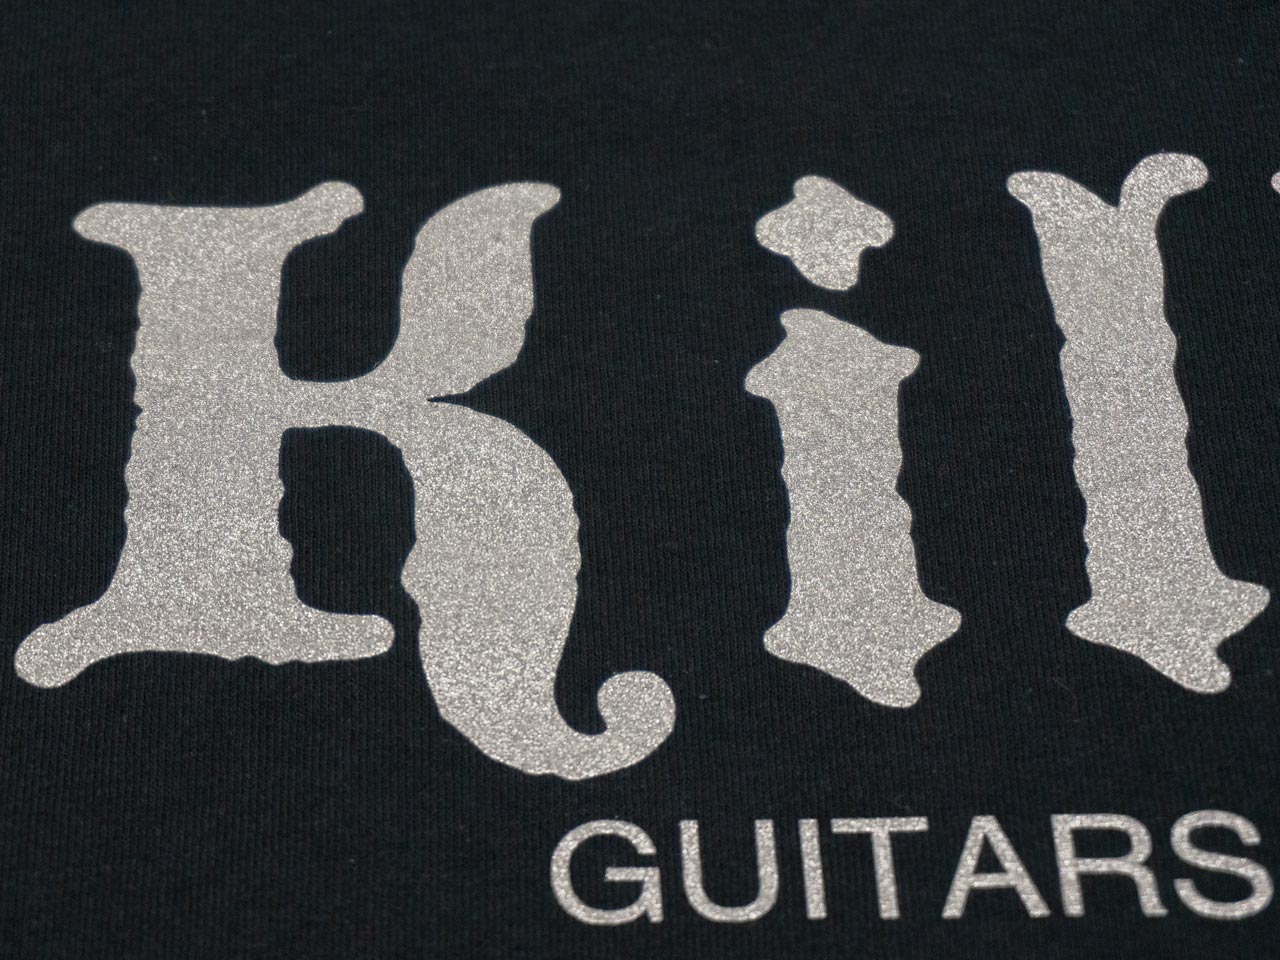 killer guitars t-shirt long sleeve silver logo image